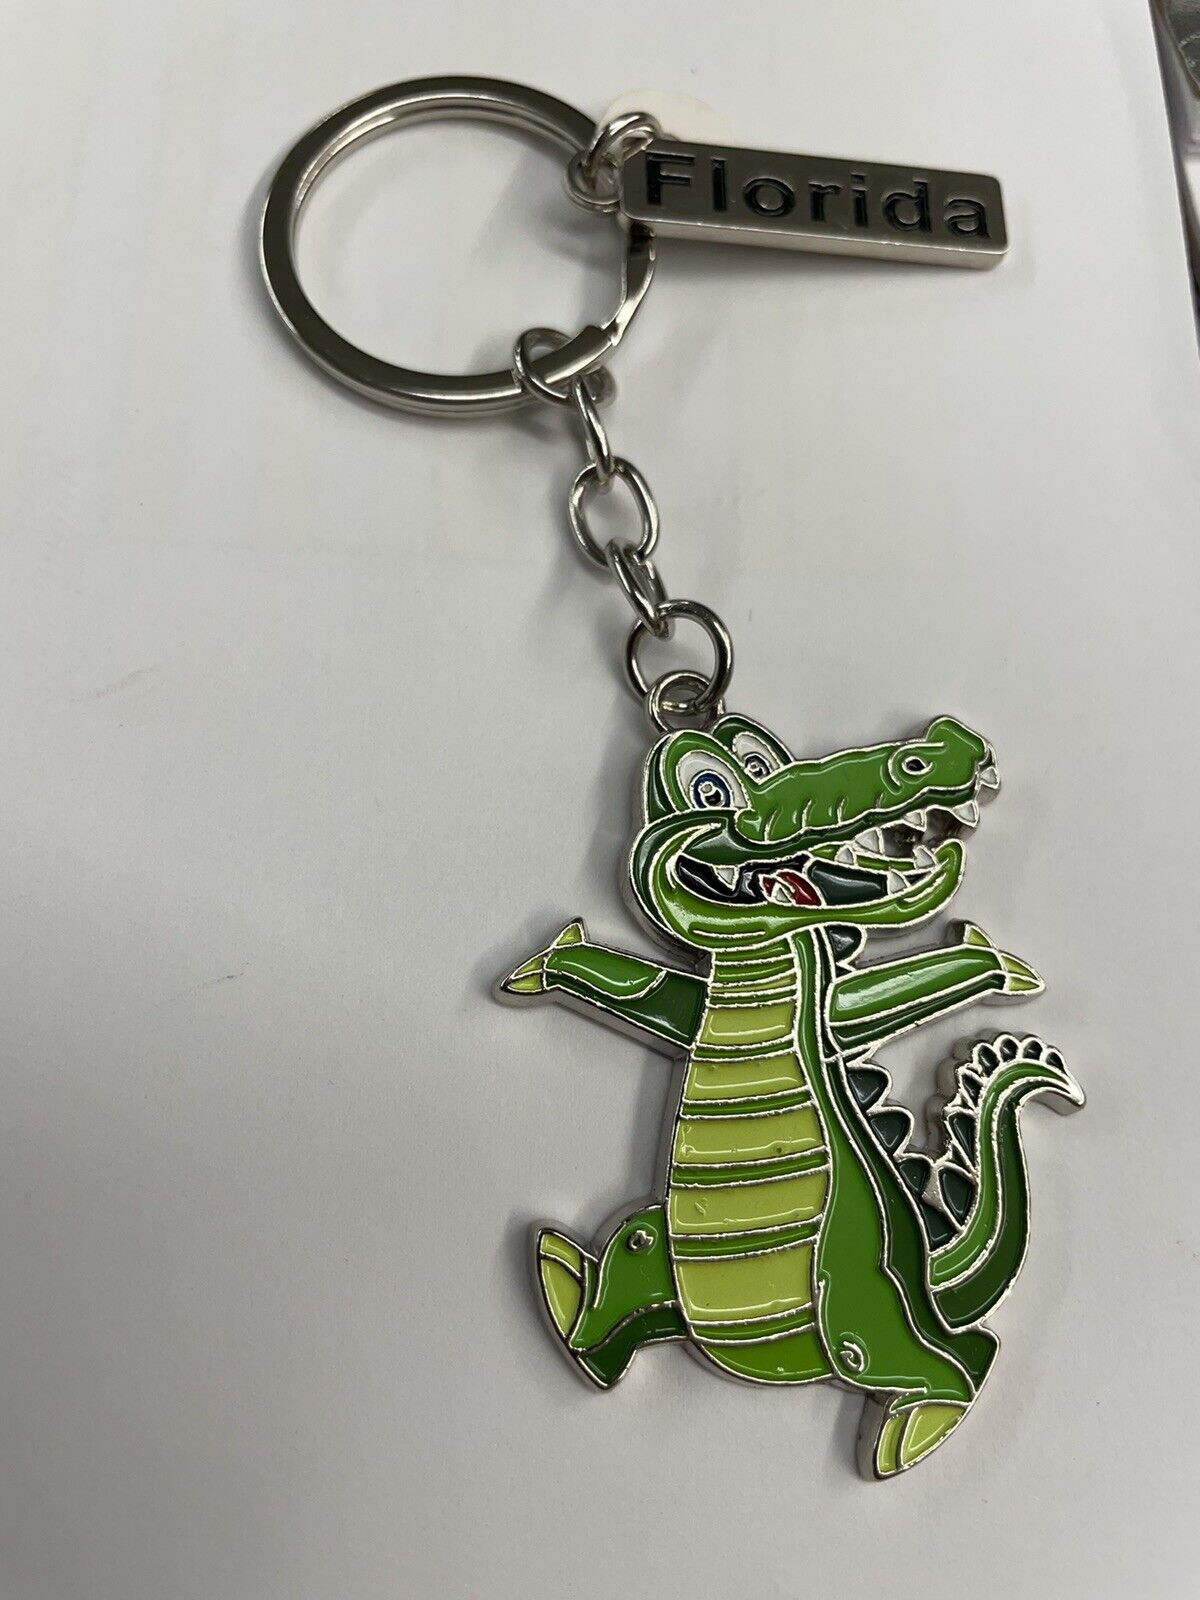 Florida Gators Metal Keychain Enameled Alligator Key Chain Ring